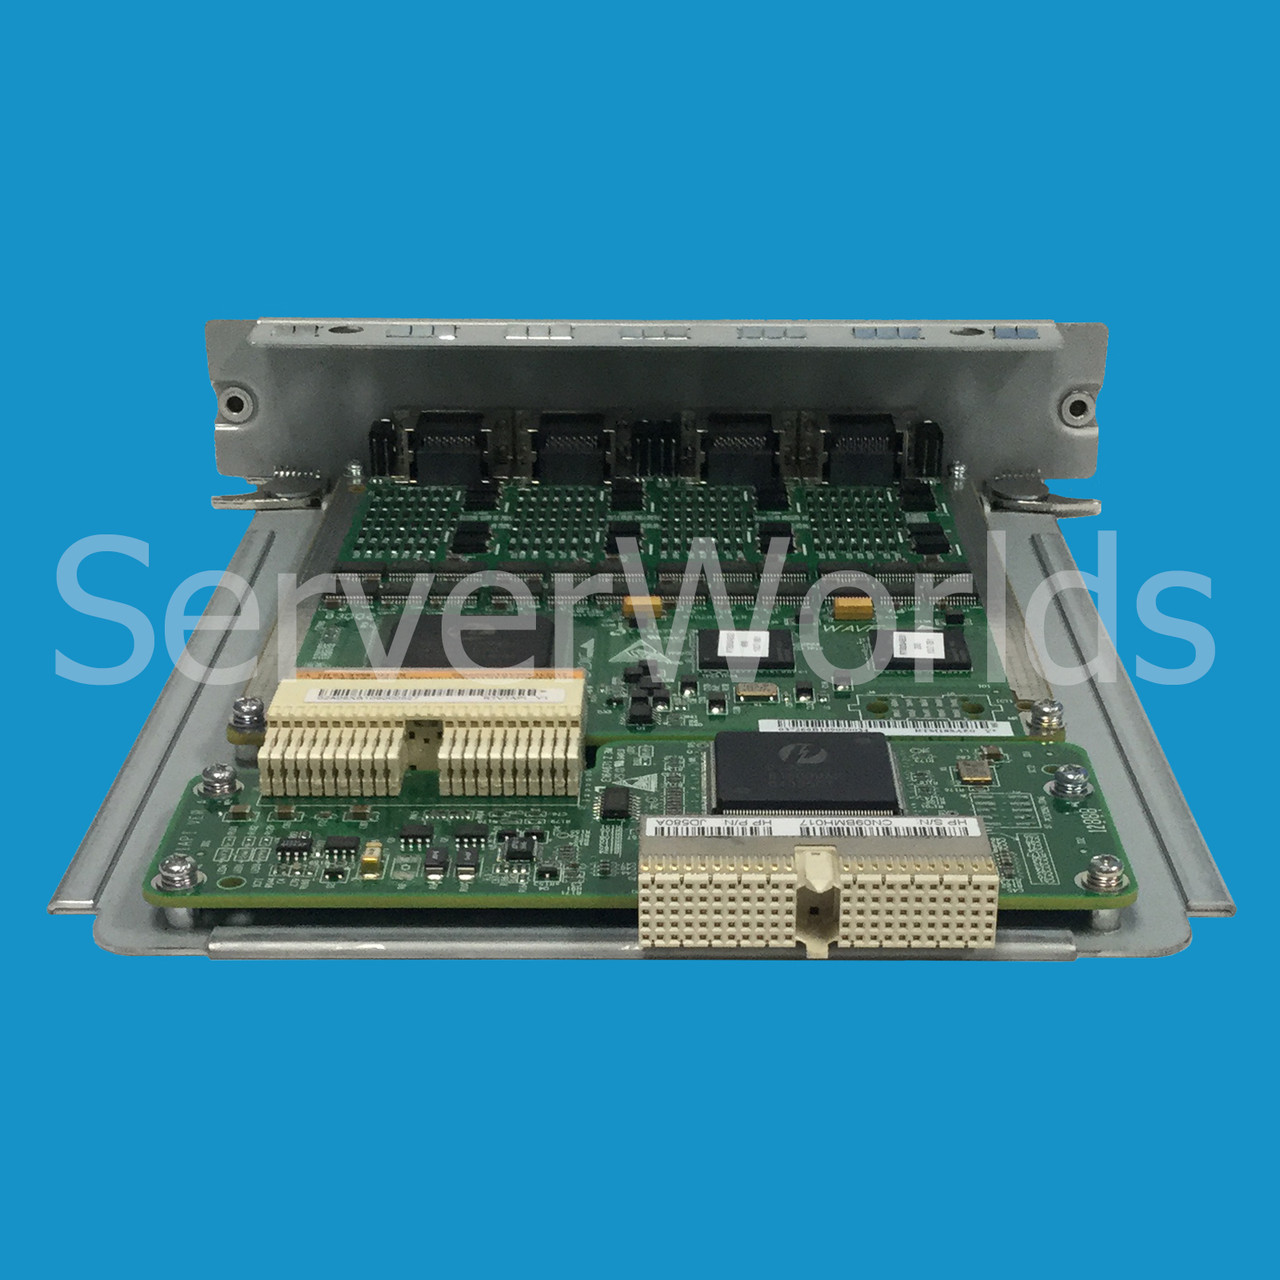 HP JD580A MSR 8-port Serial FIC module